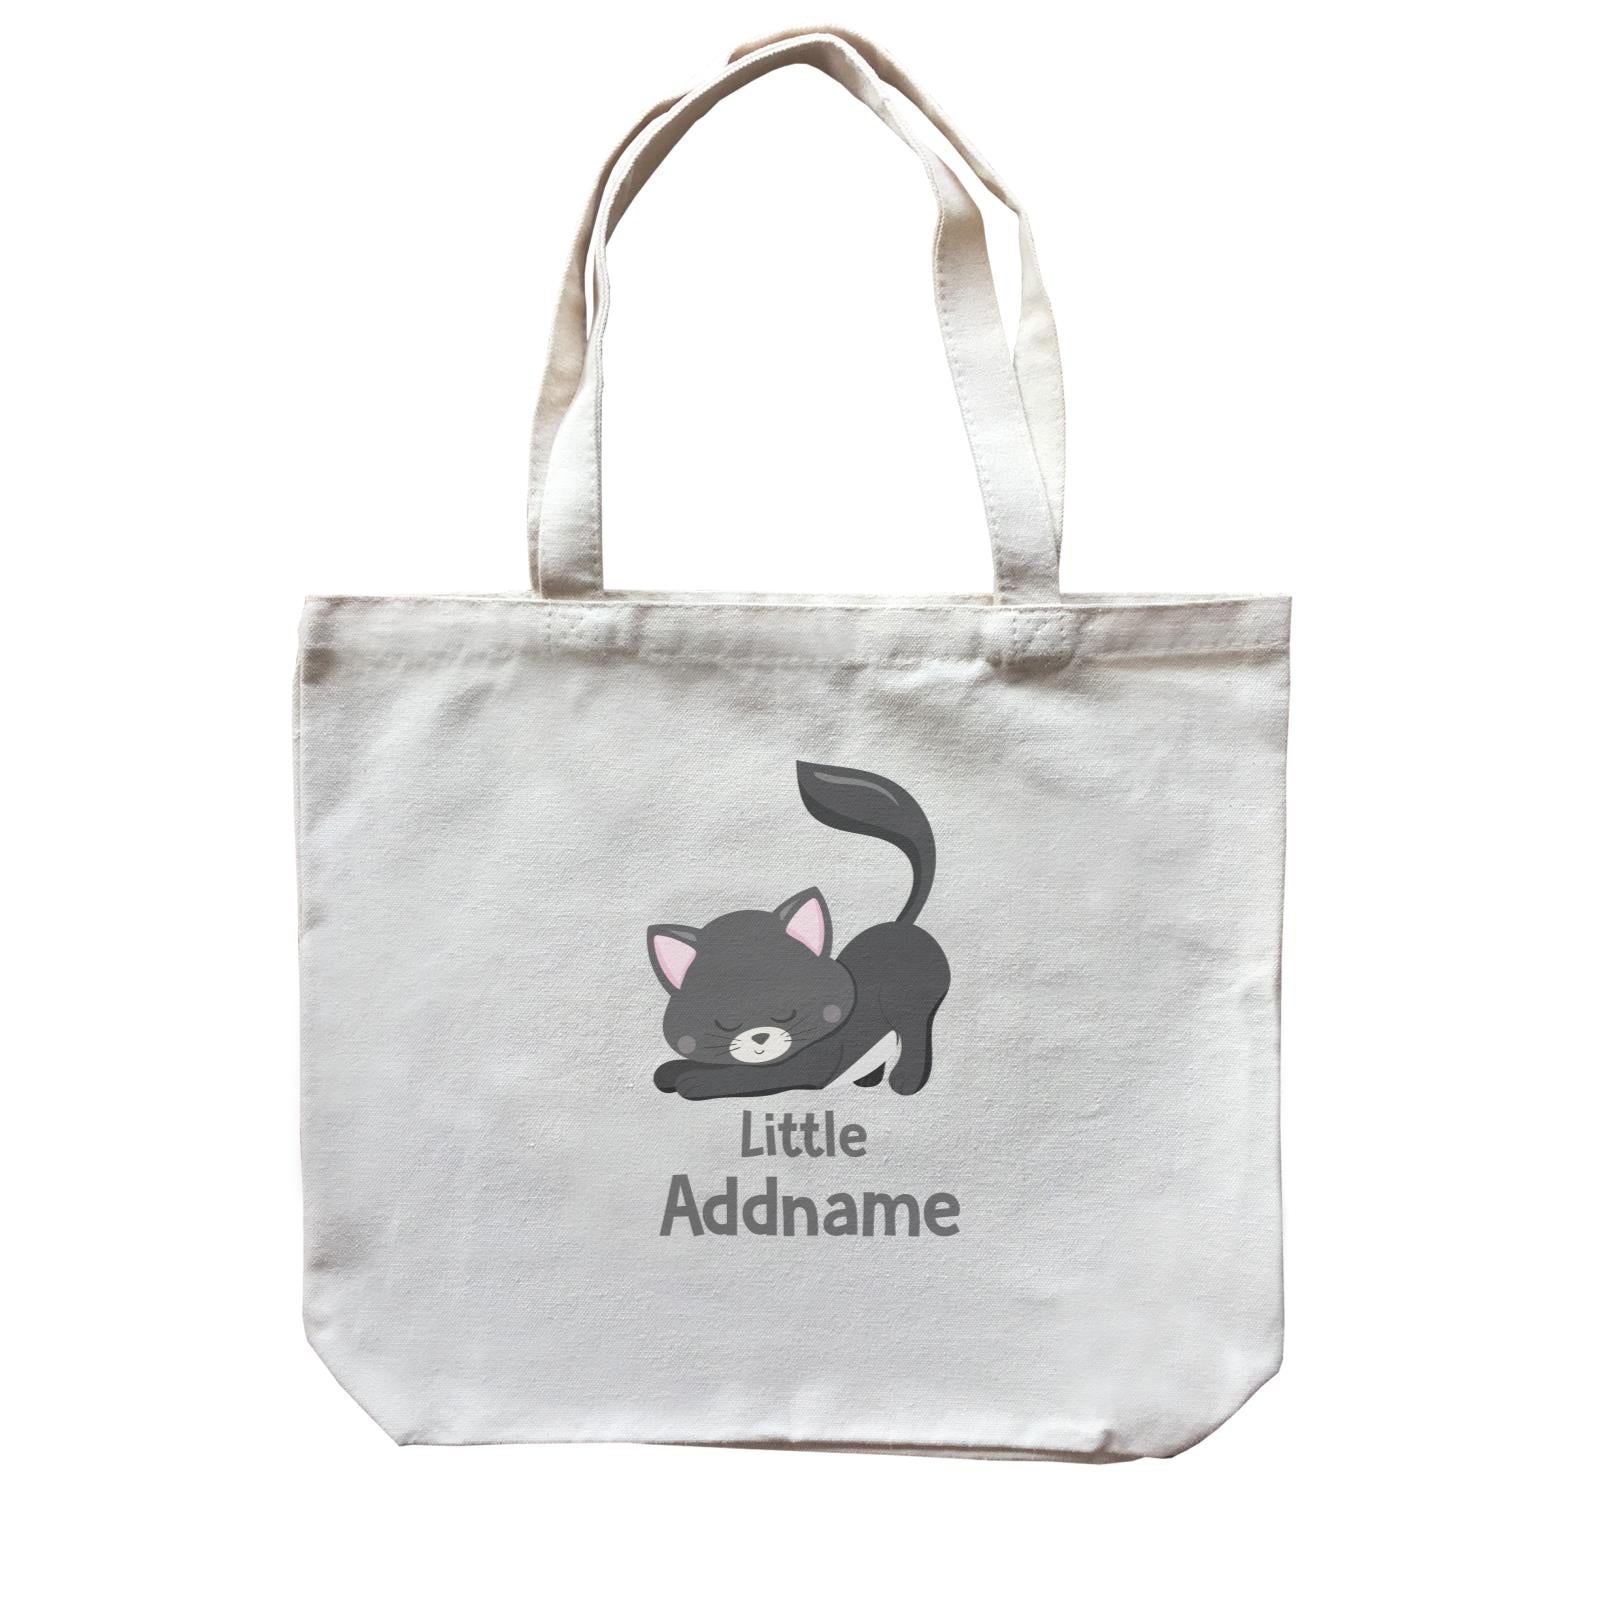 Adorable Cats Black Cat Little Addname Canvas Bag